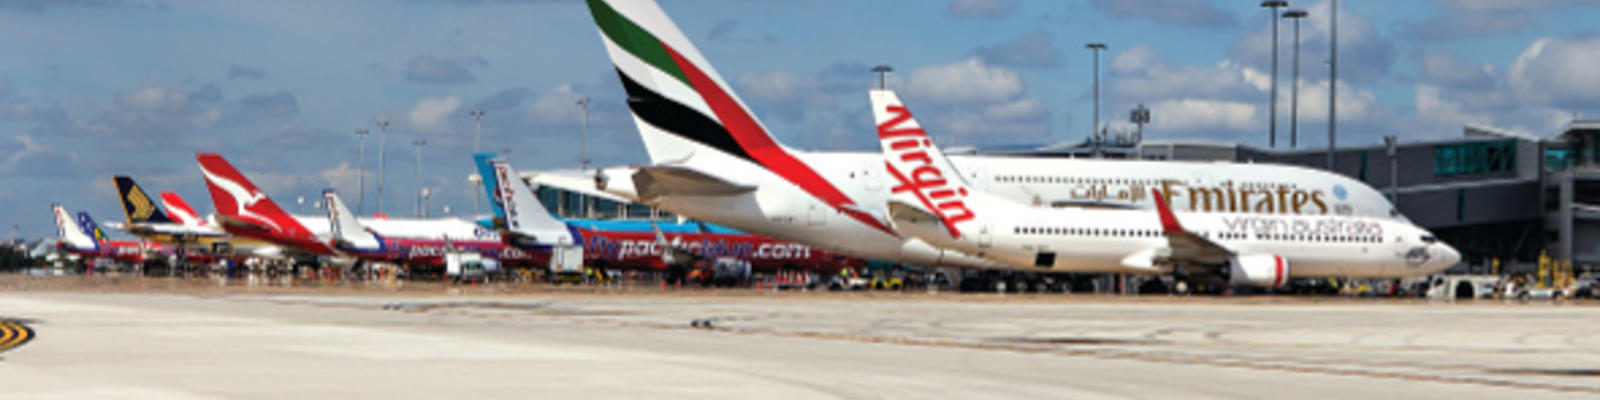 Brisbane Airport Aircraft Parking